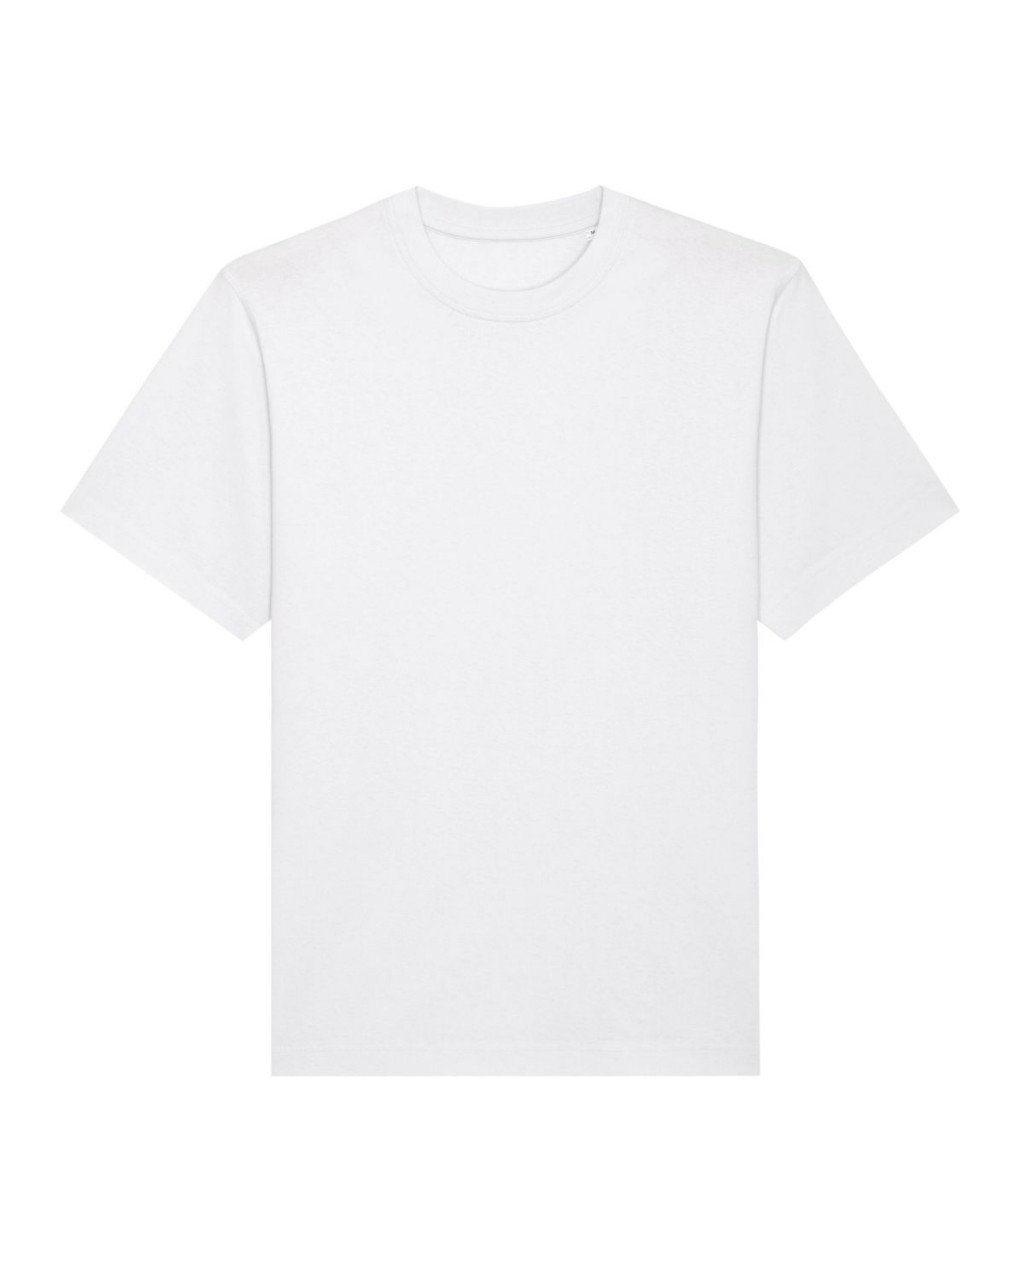 MS Oversized Heavy T-Shirt white - gw Basics - HERREN | T-Shirts | Unifarben & Streifen